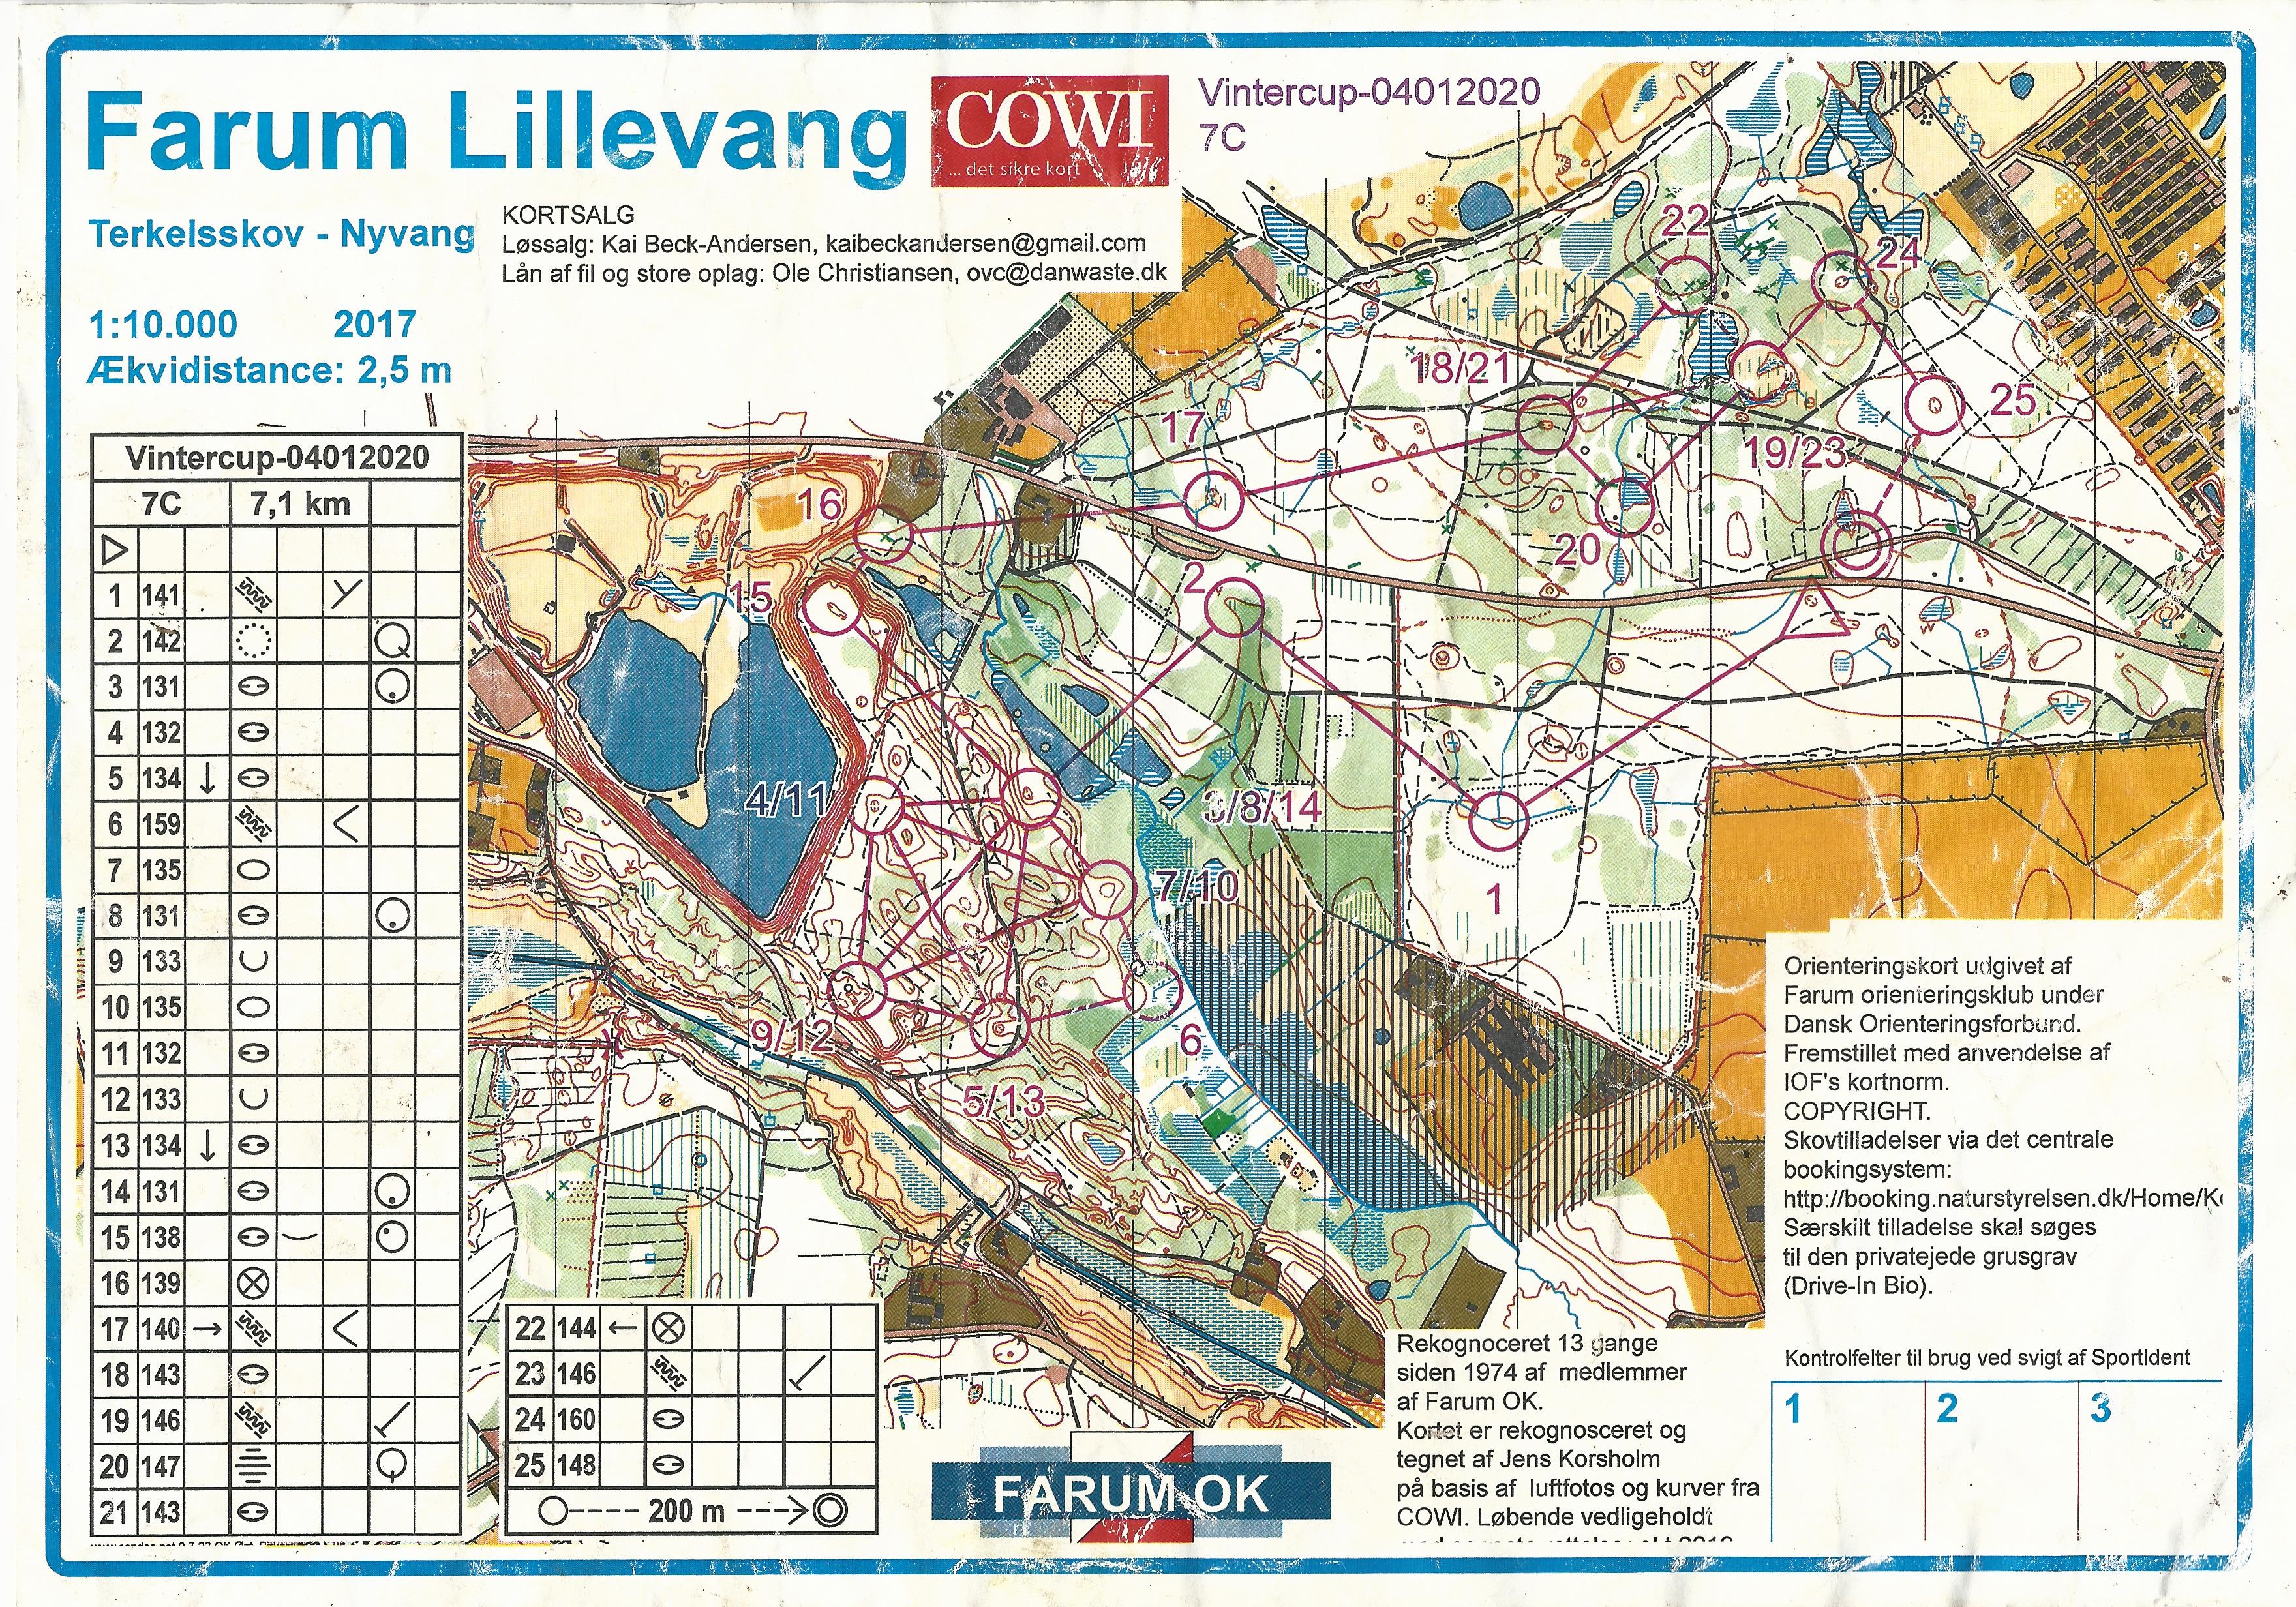 Vintercup, Farum Lillevang, H40 (04/01/2020)